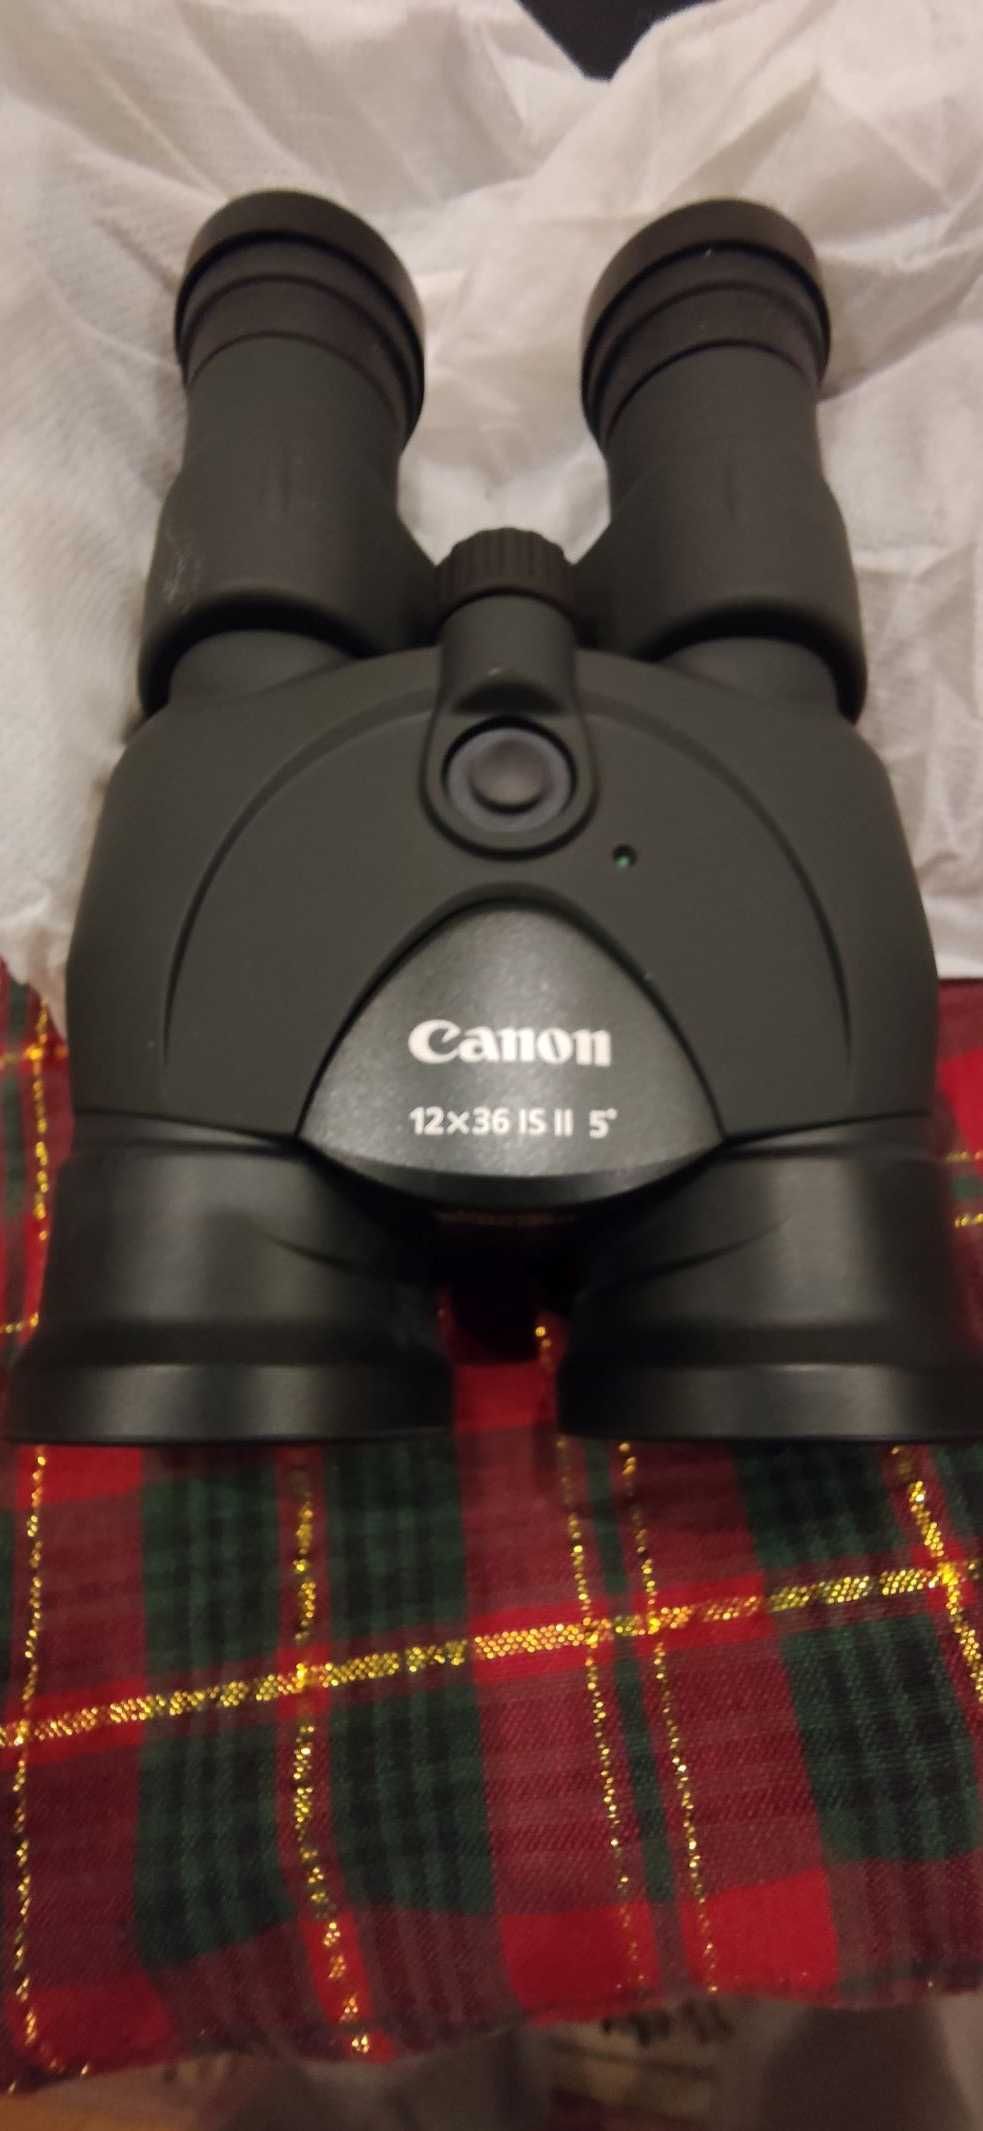 Новый бинокль Canon 12x36 IS II 5" со стабилизатором!